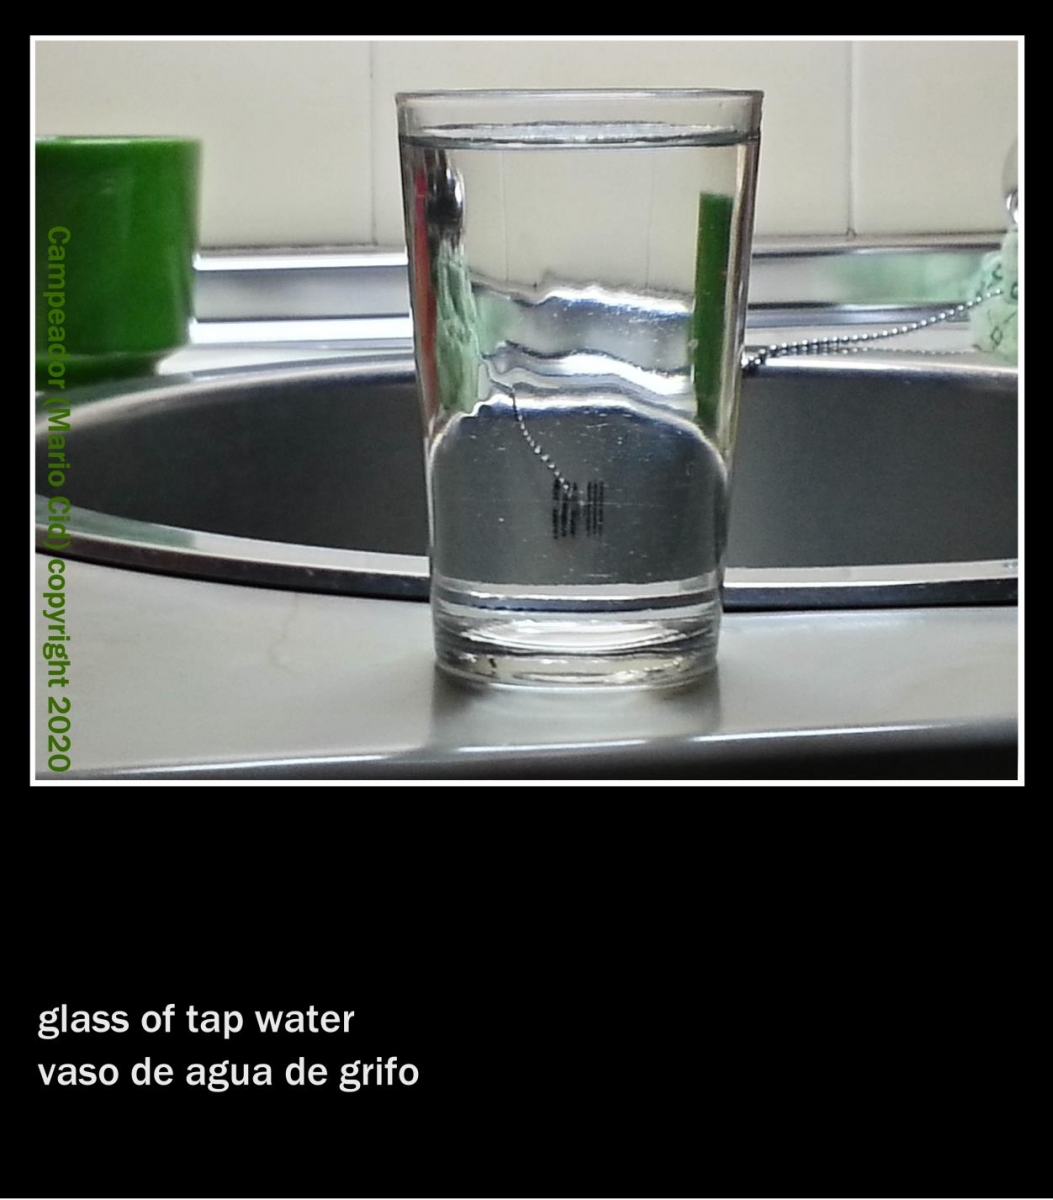 vaso de agua de grifo - glass of tap water. Photography by Campeador (2020)